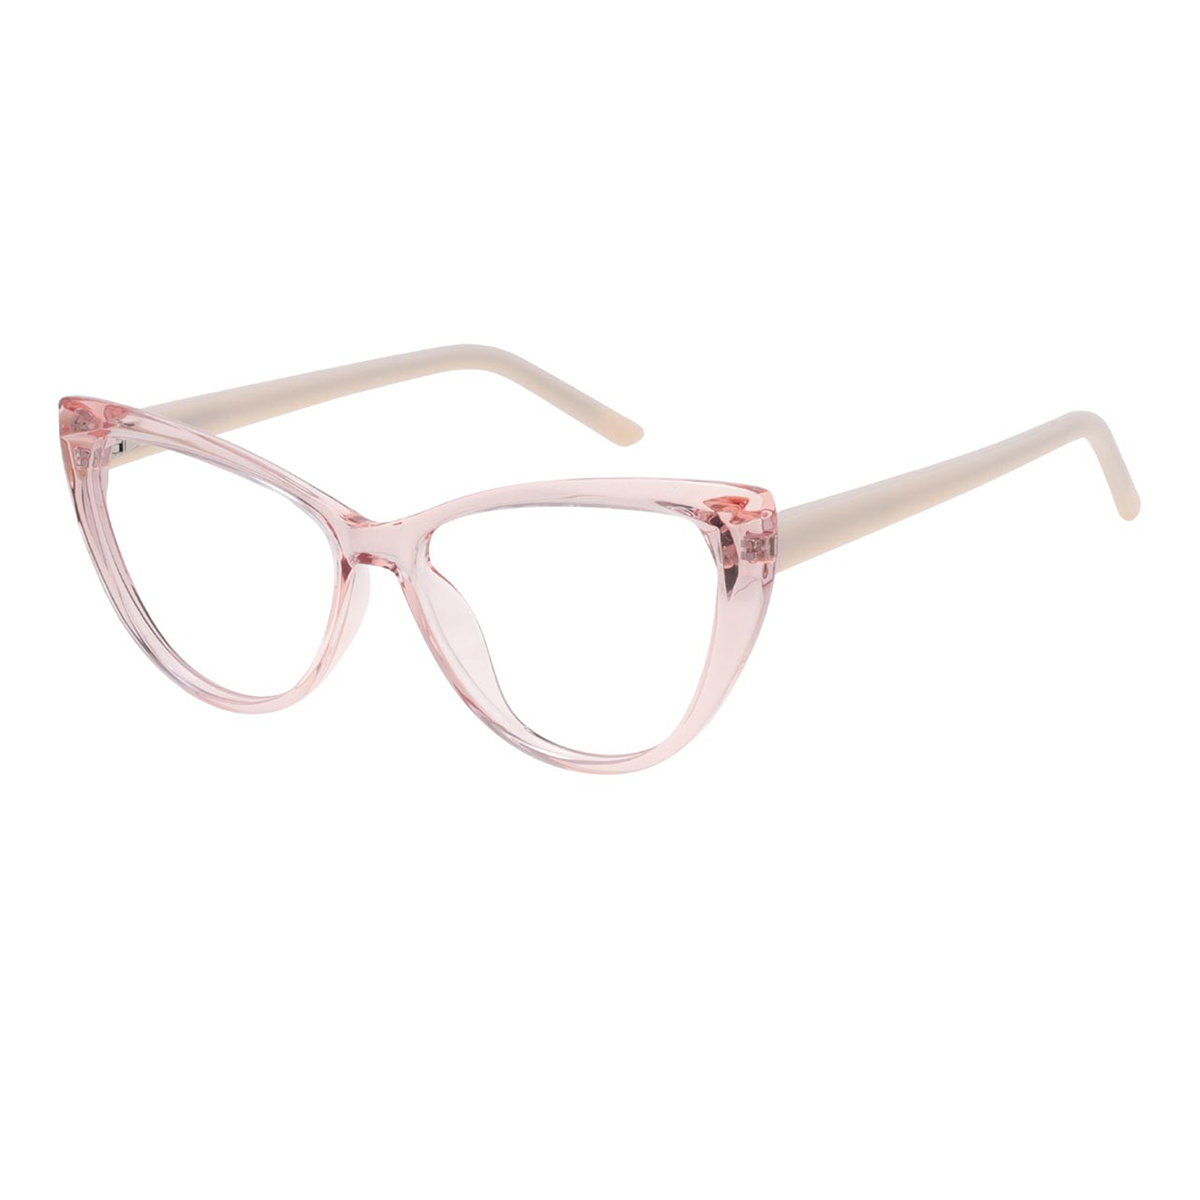 Lottie - Cat-eye Pink Reading Glasses for Women